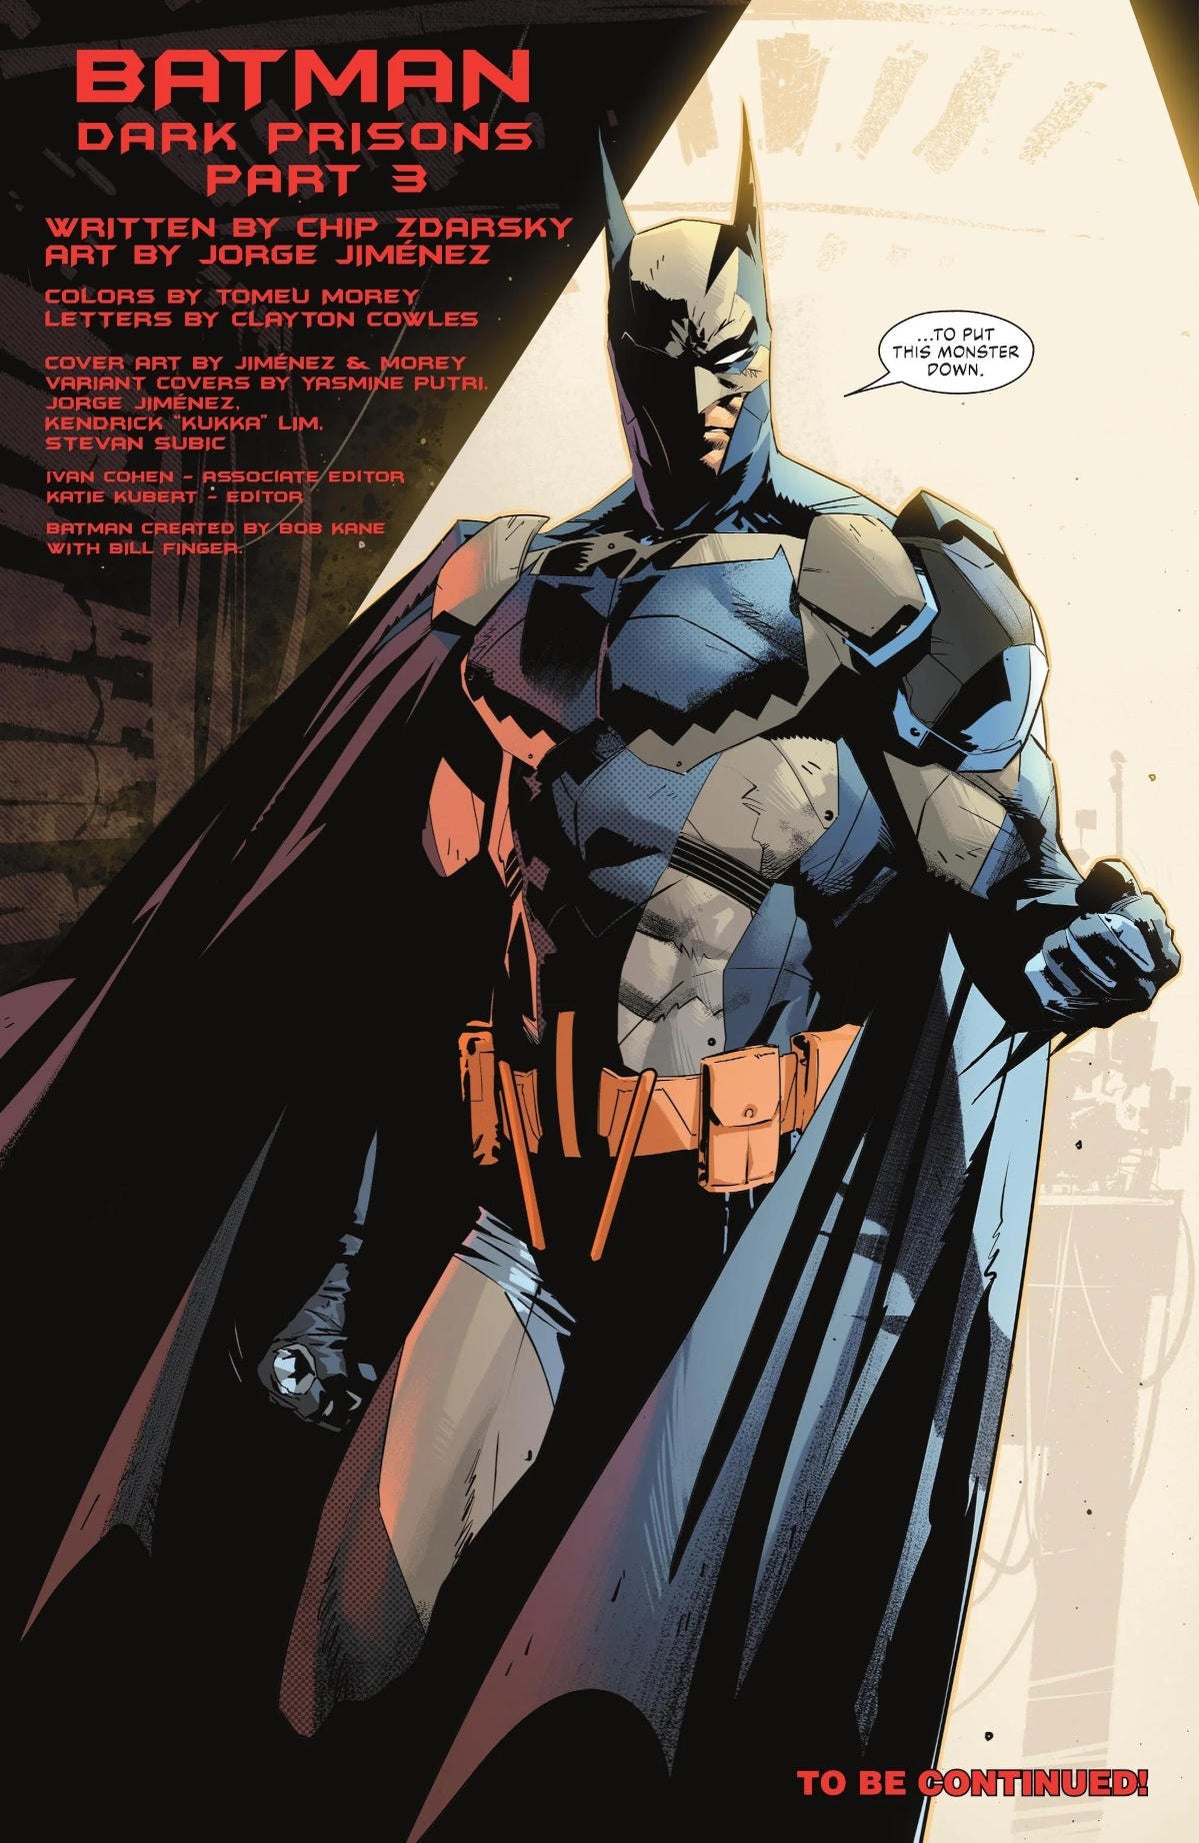 batman-147-spoilers-new-costume-suit-image.jpg